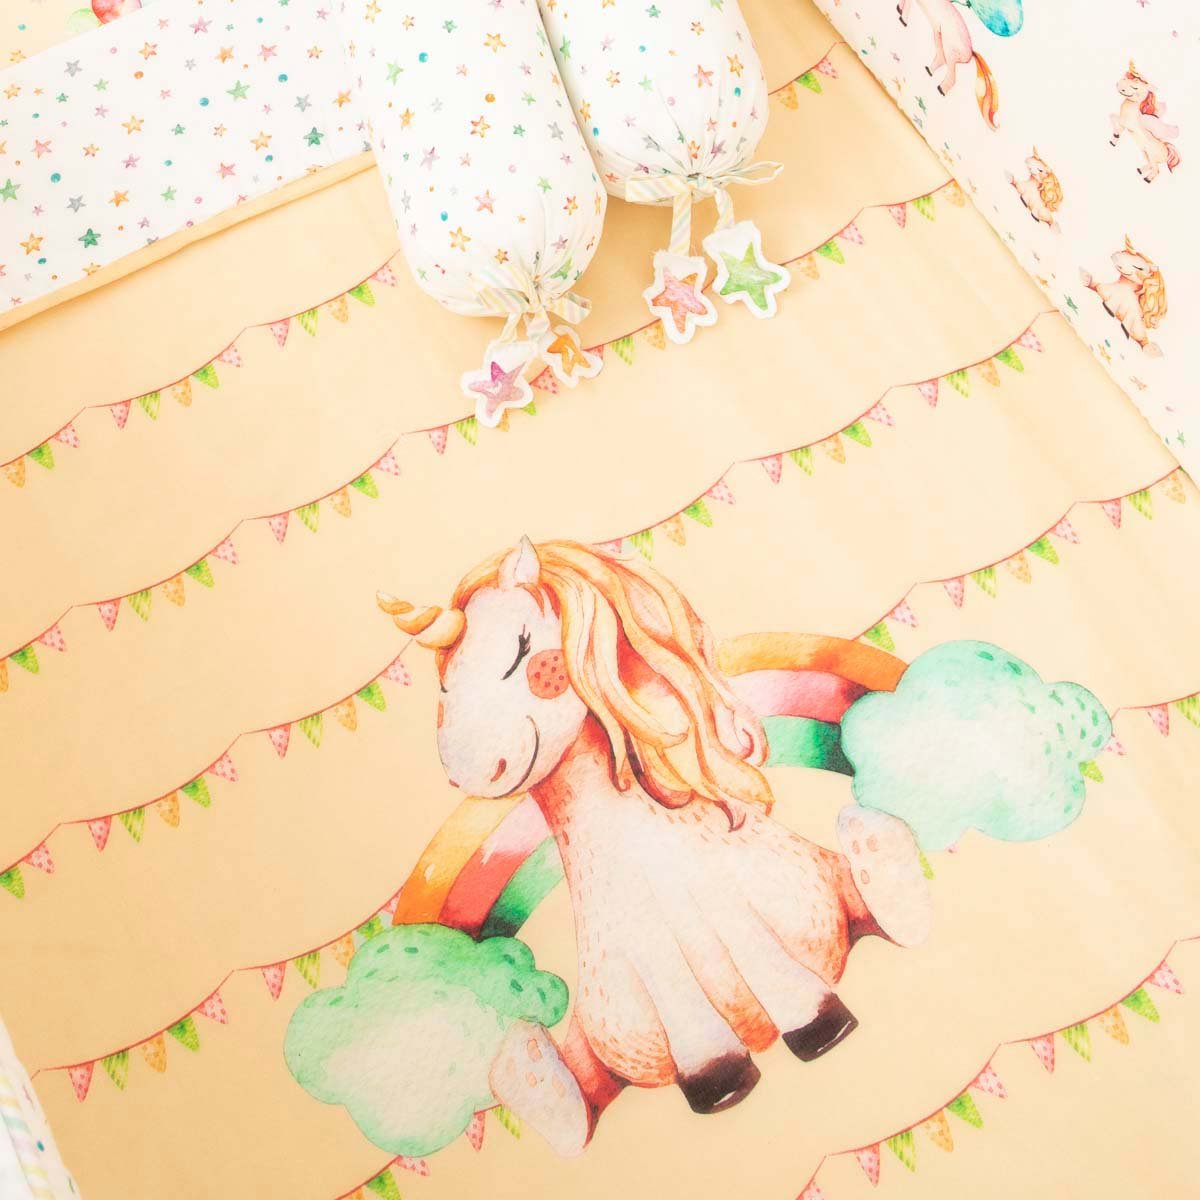 Miss Bella the Unicorn - Cot Bedding Set with Bumper - Peach